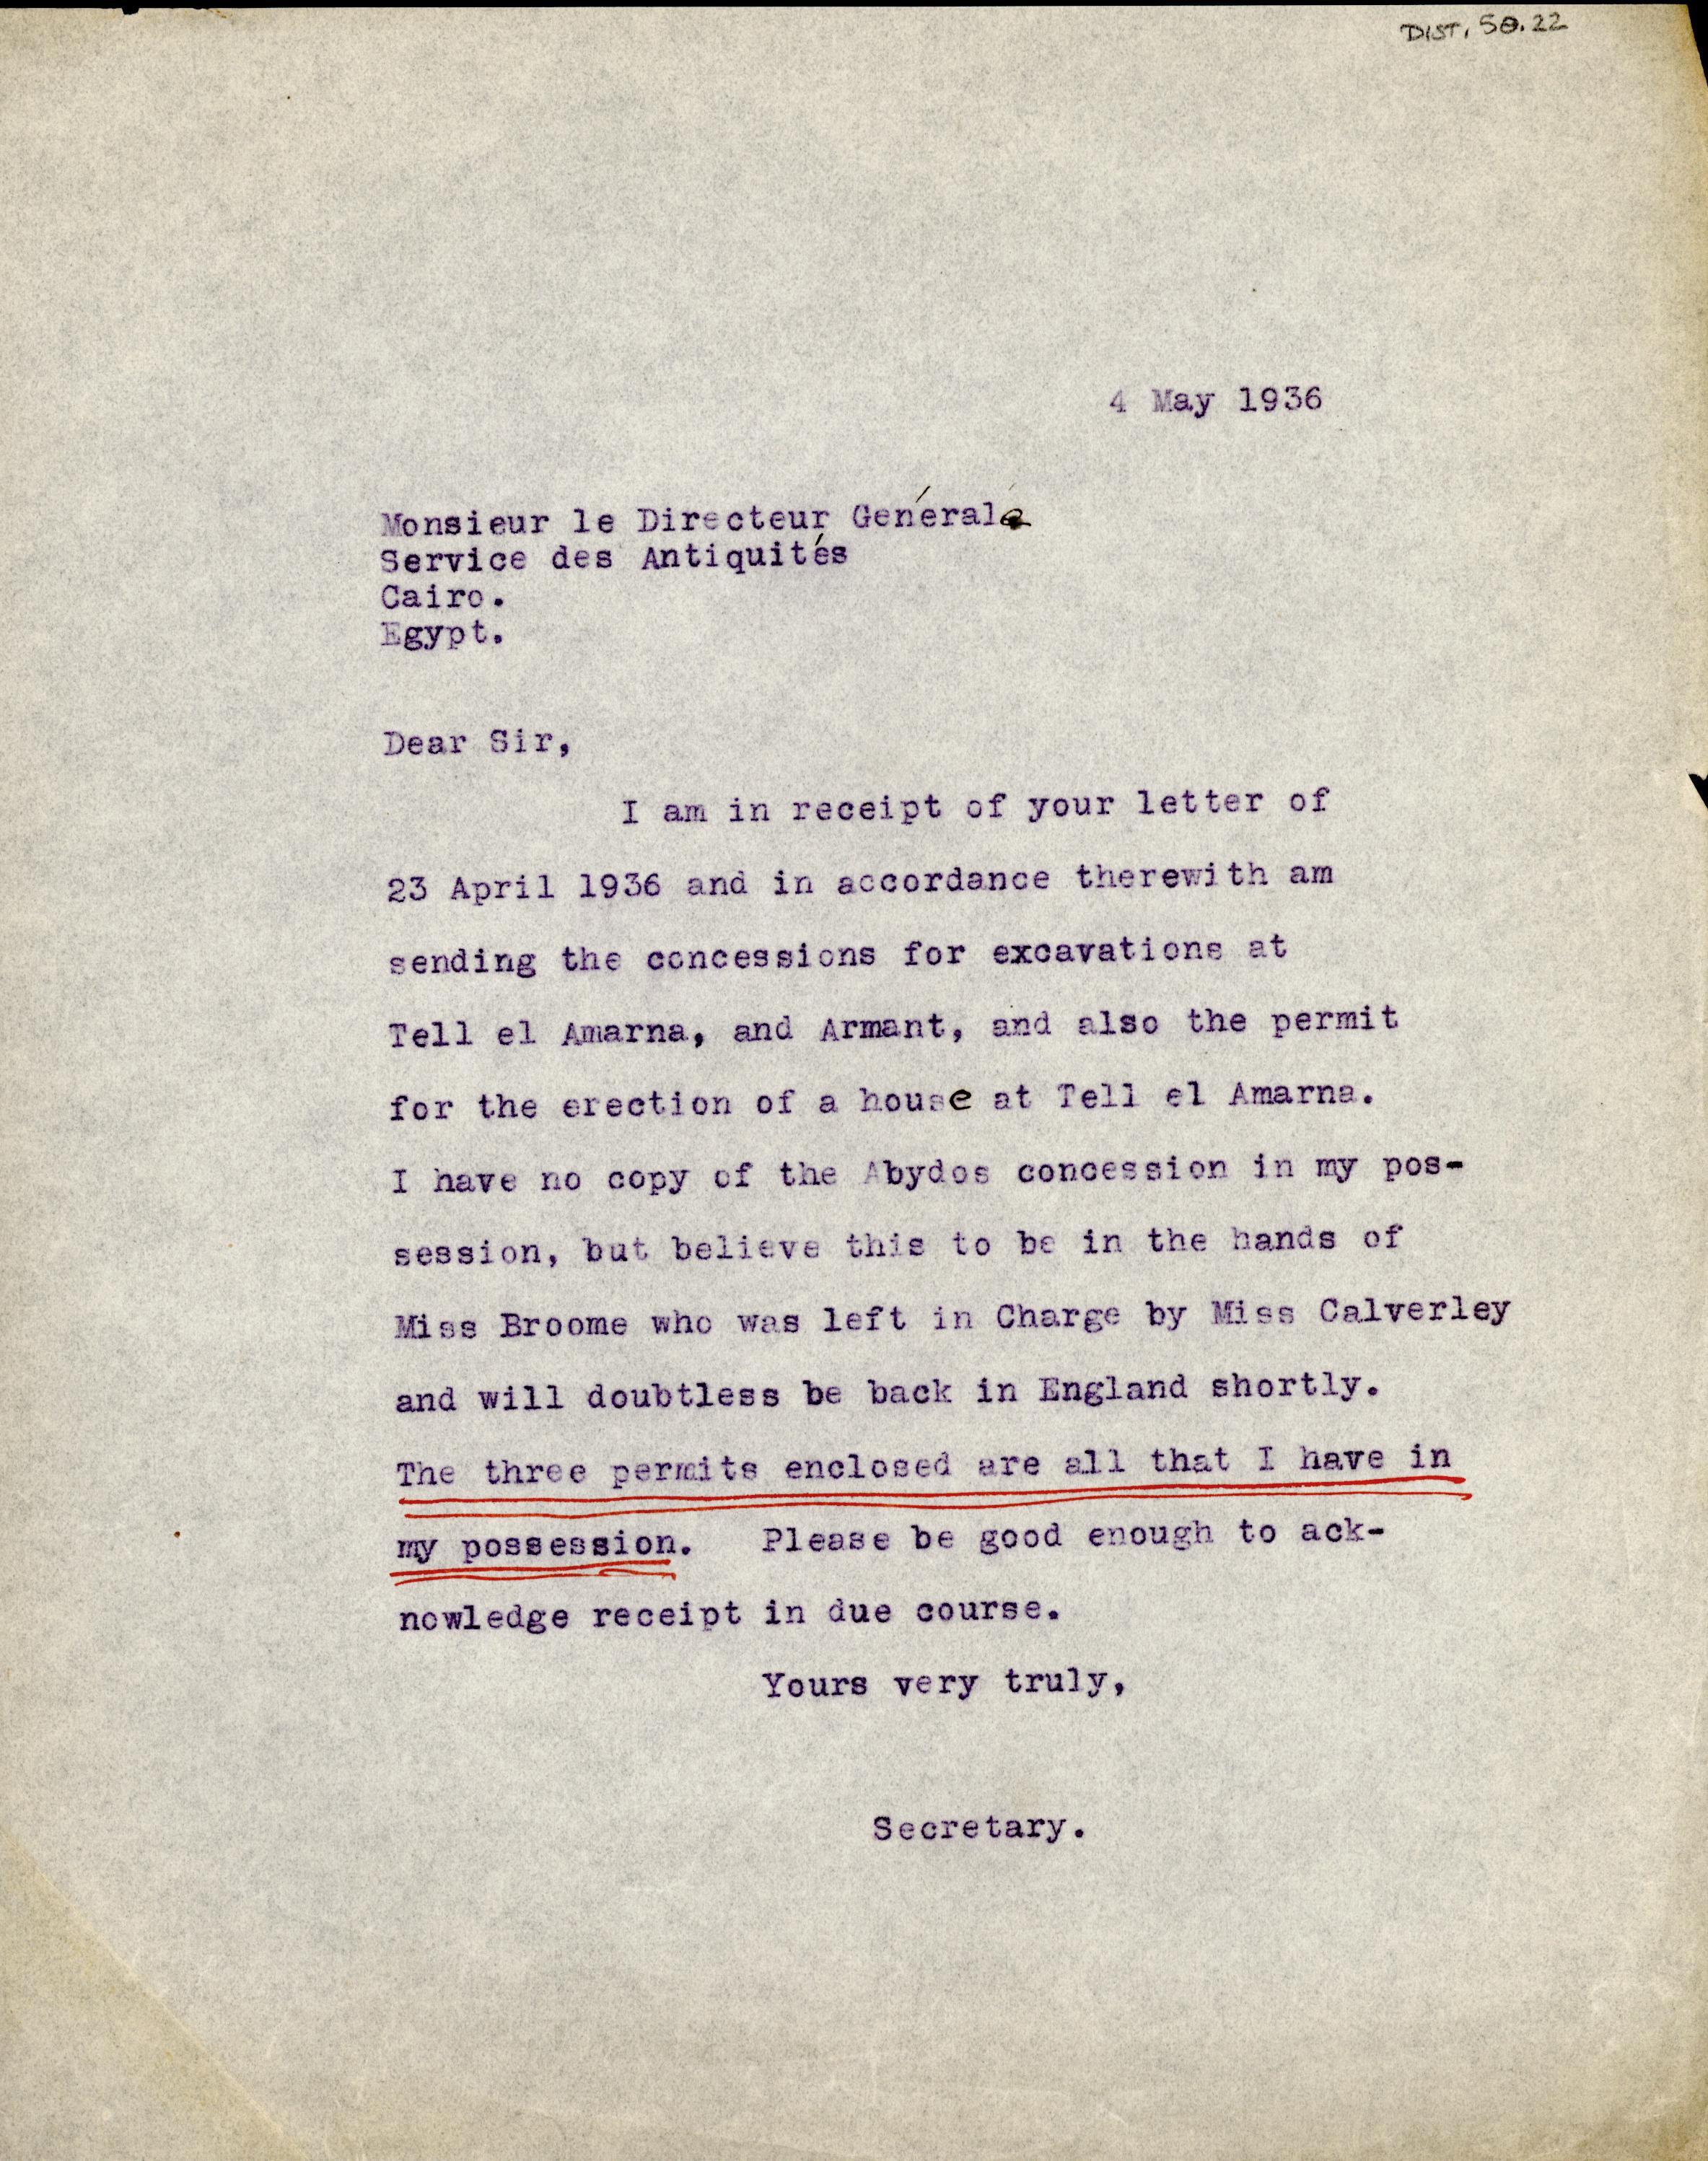 1926-39 correspondence with Antiquities Service DIST.50.22